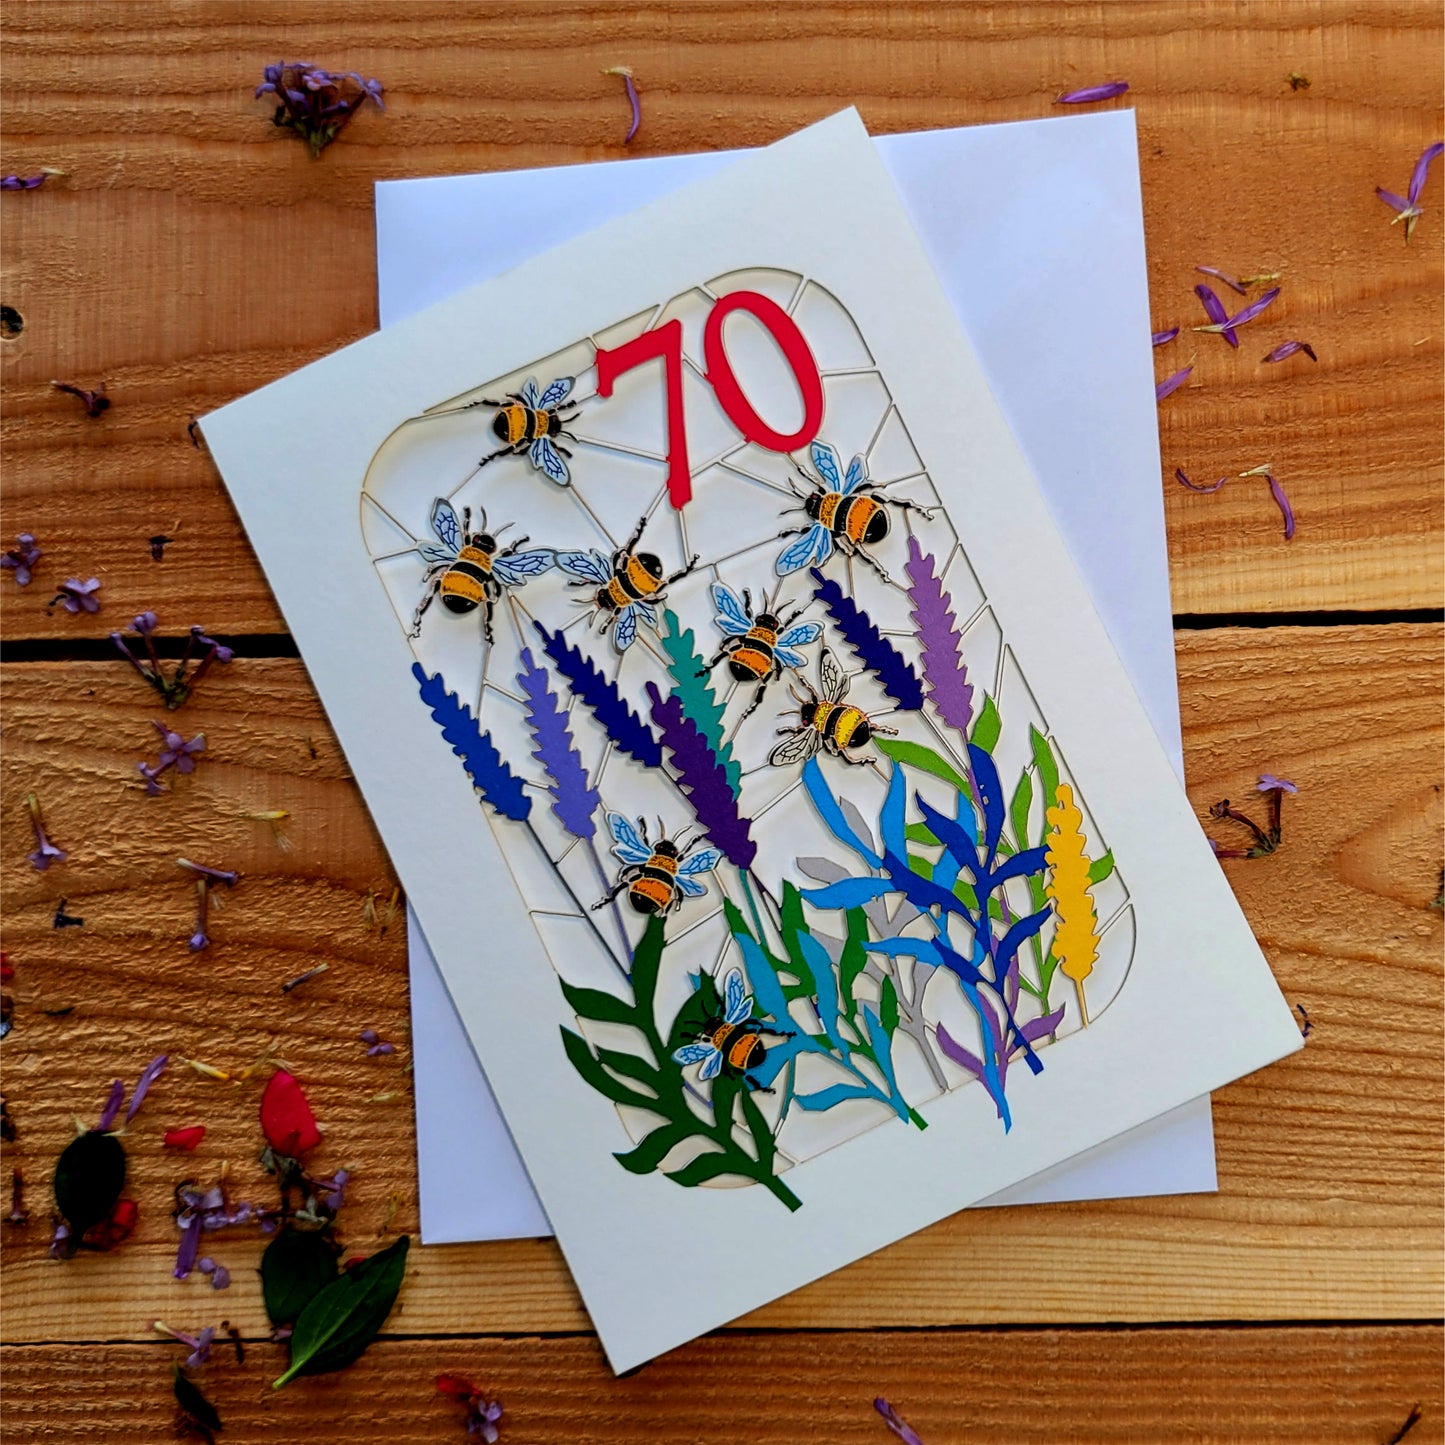 Age 70 Birthday Card, 70th Birthday Card, Bee Card - Be070